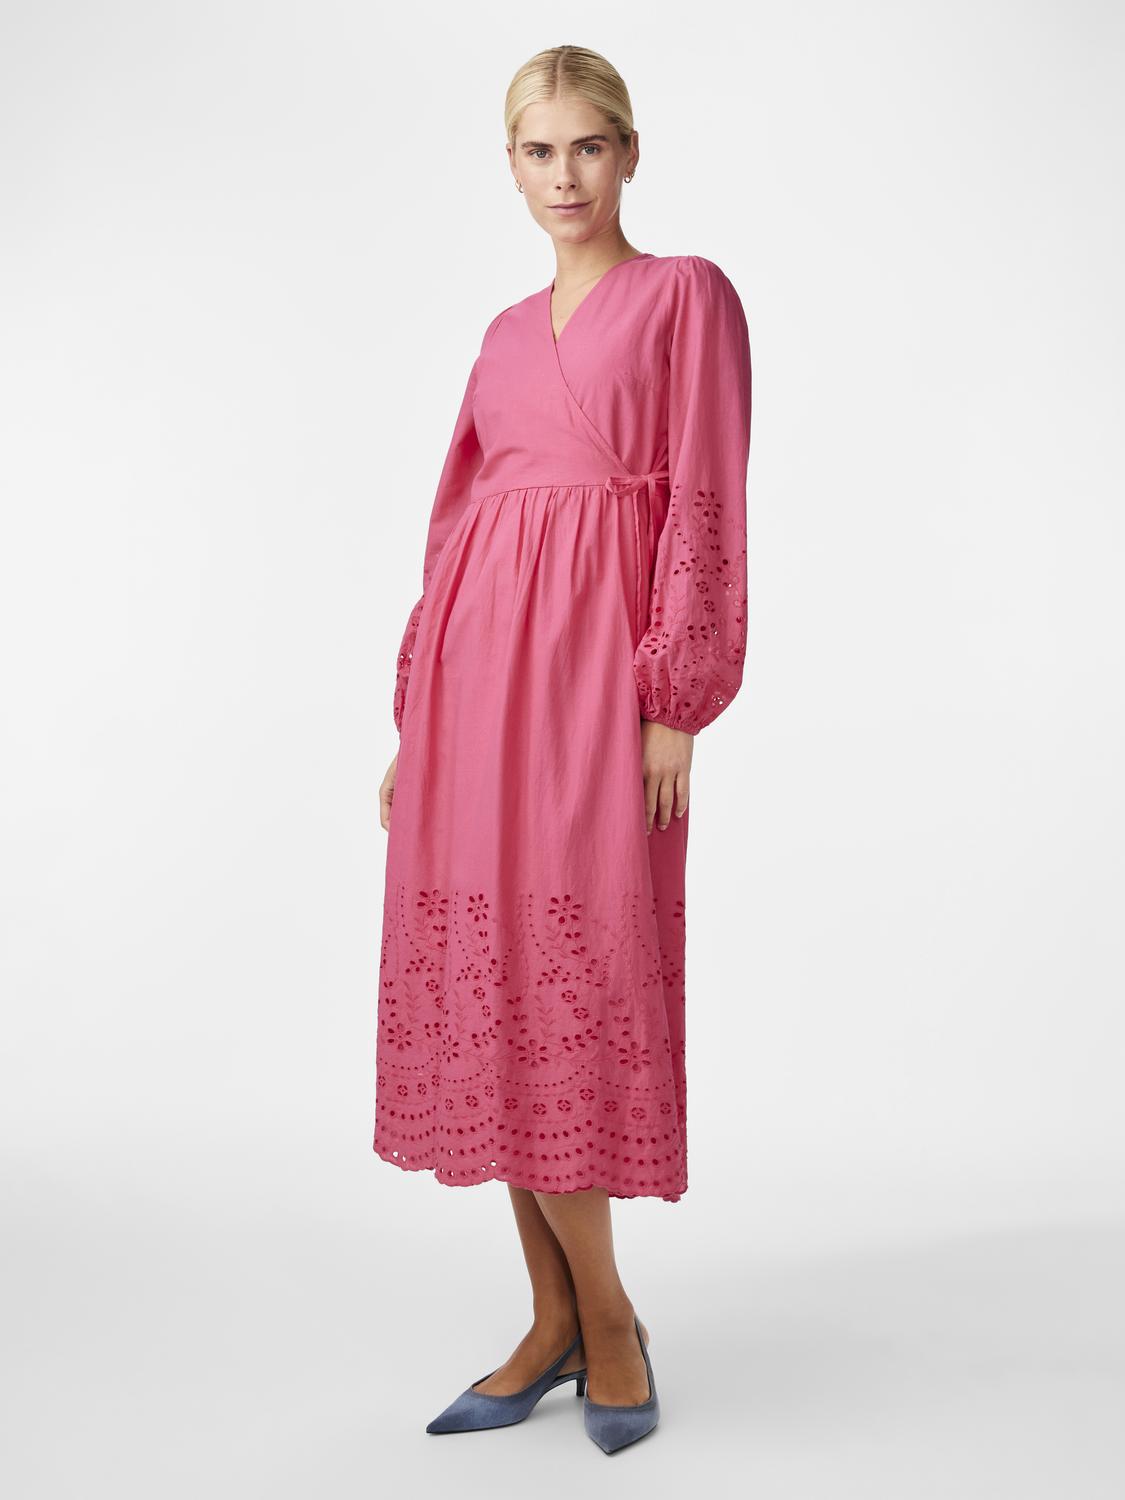 YASLUMA Dress - Raspberry Sorbet